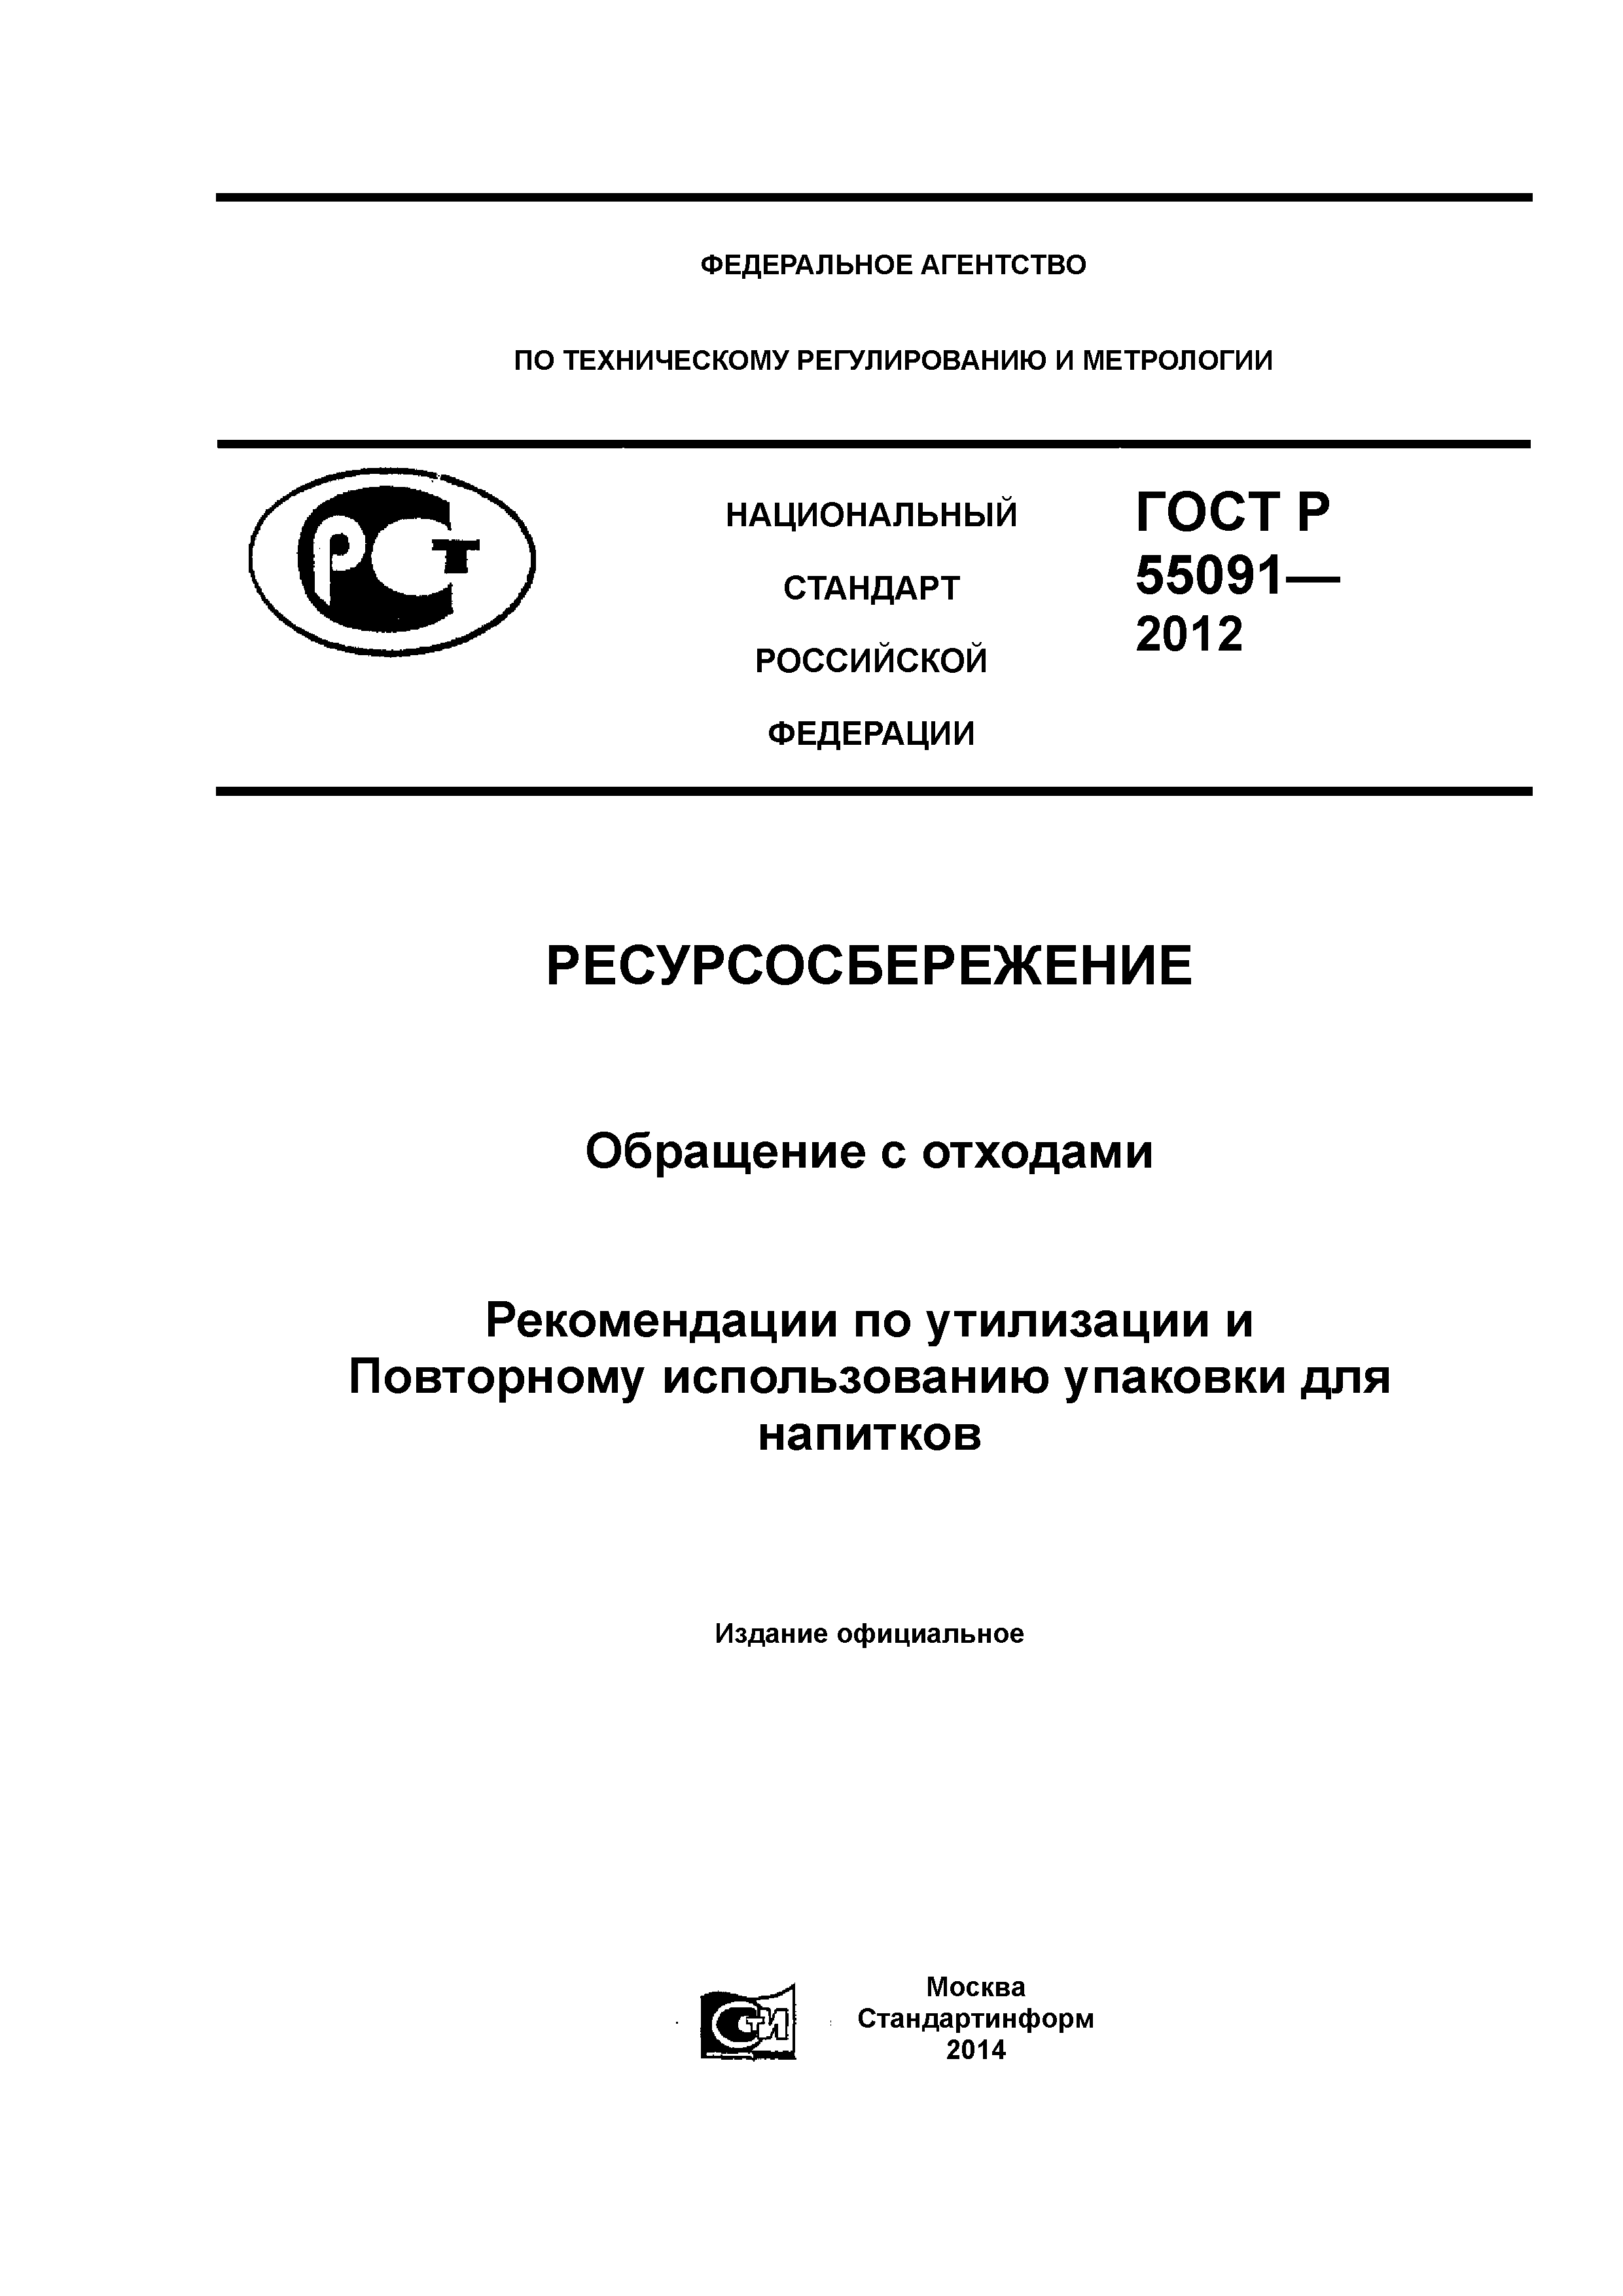 ГОСТ Р 55091-2012